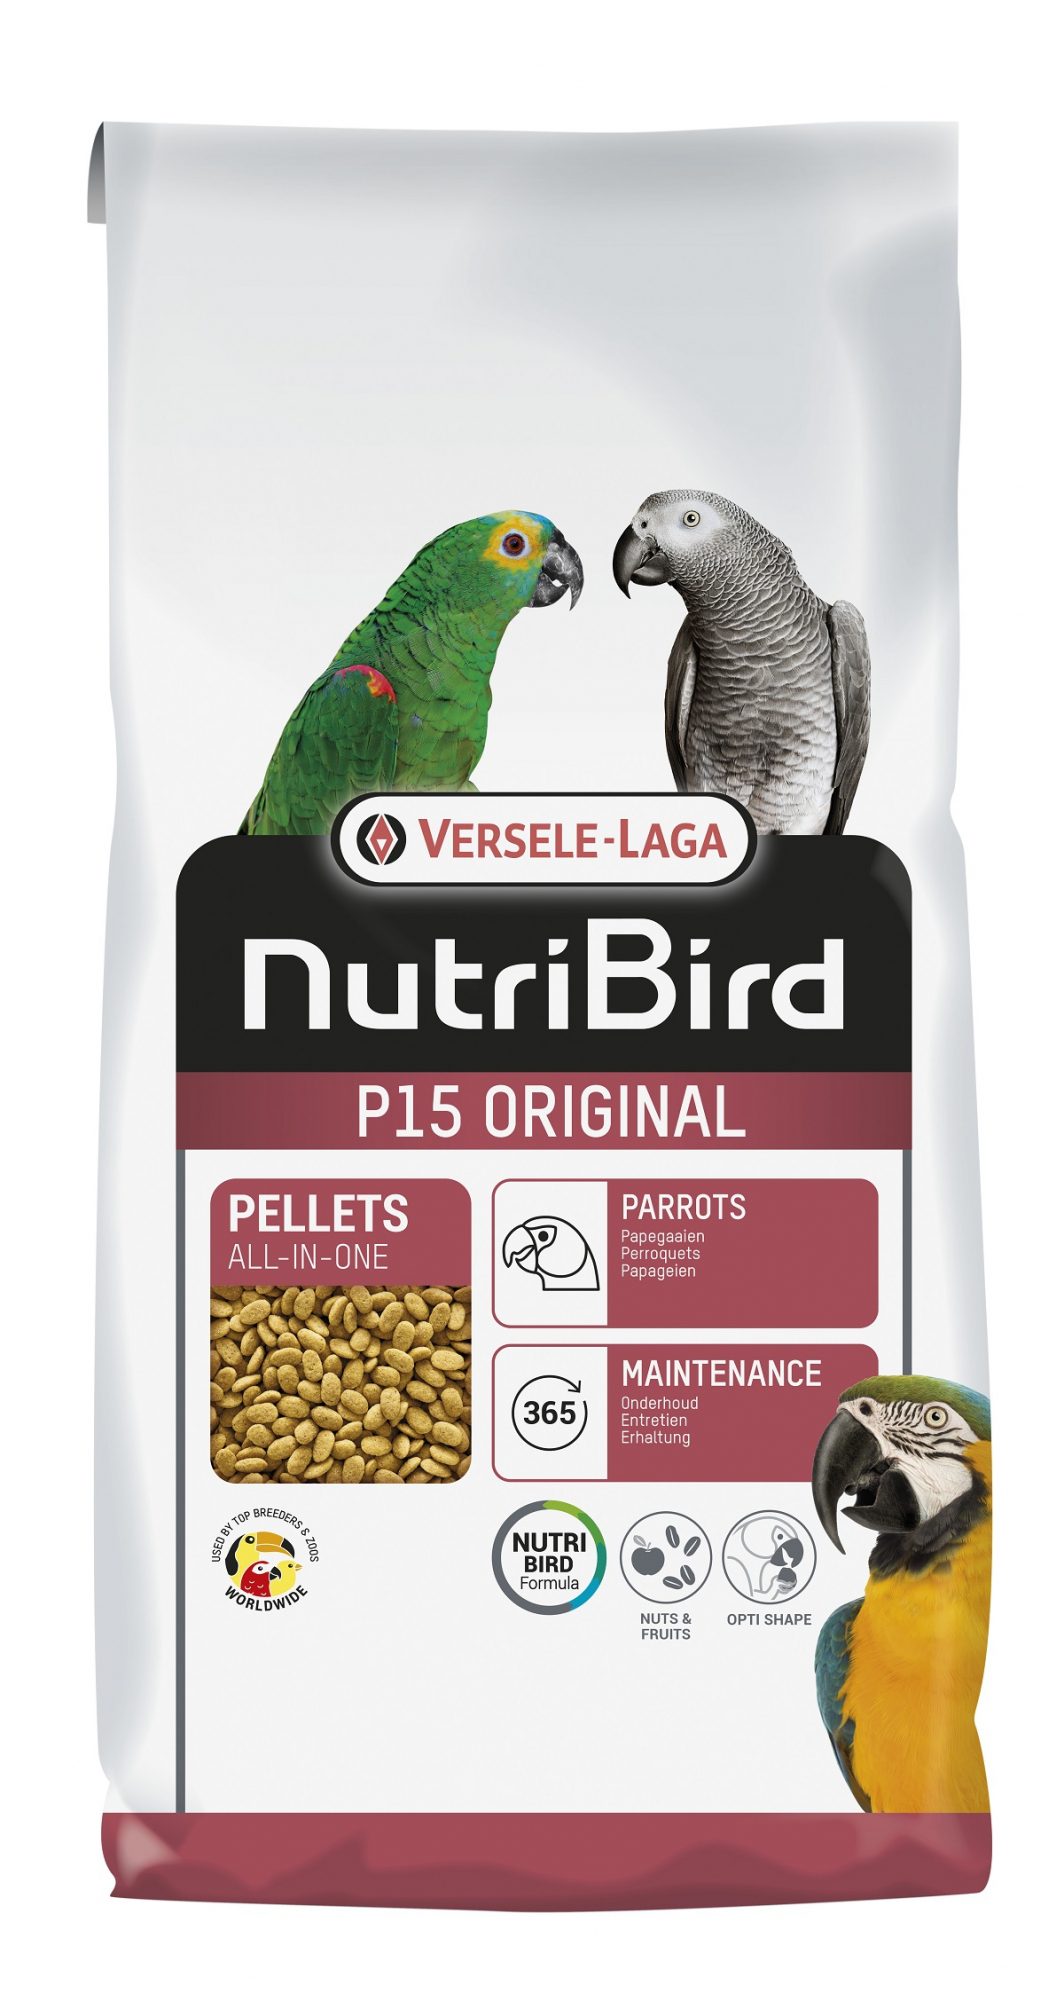 NutriBird P 15 Original entretien pour perroquets